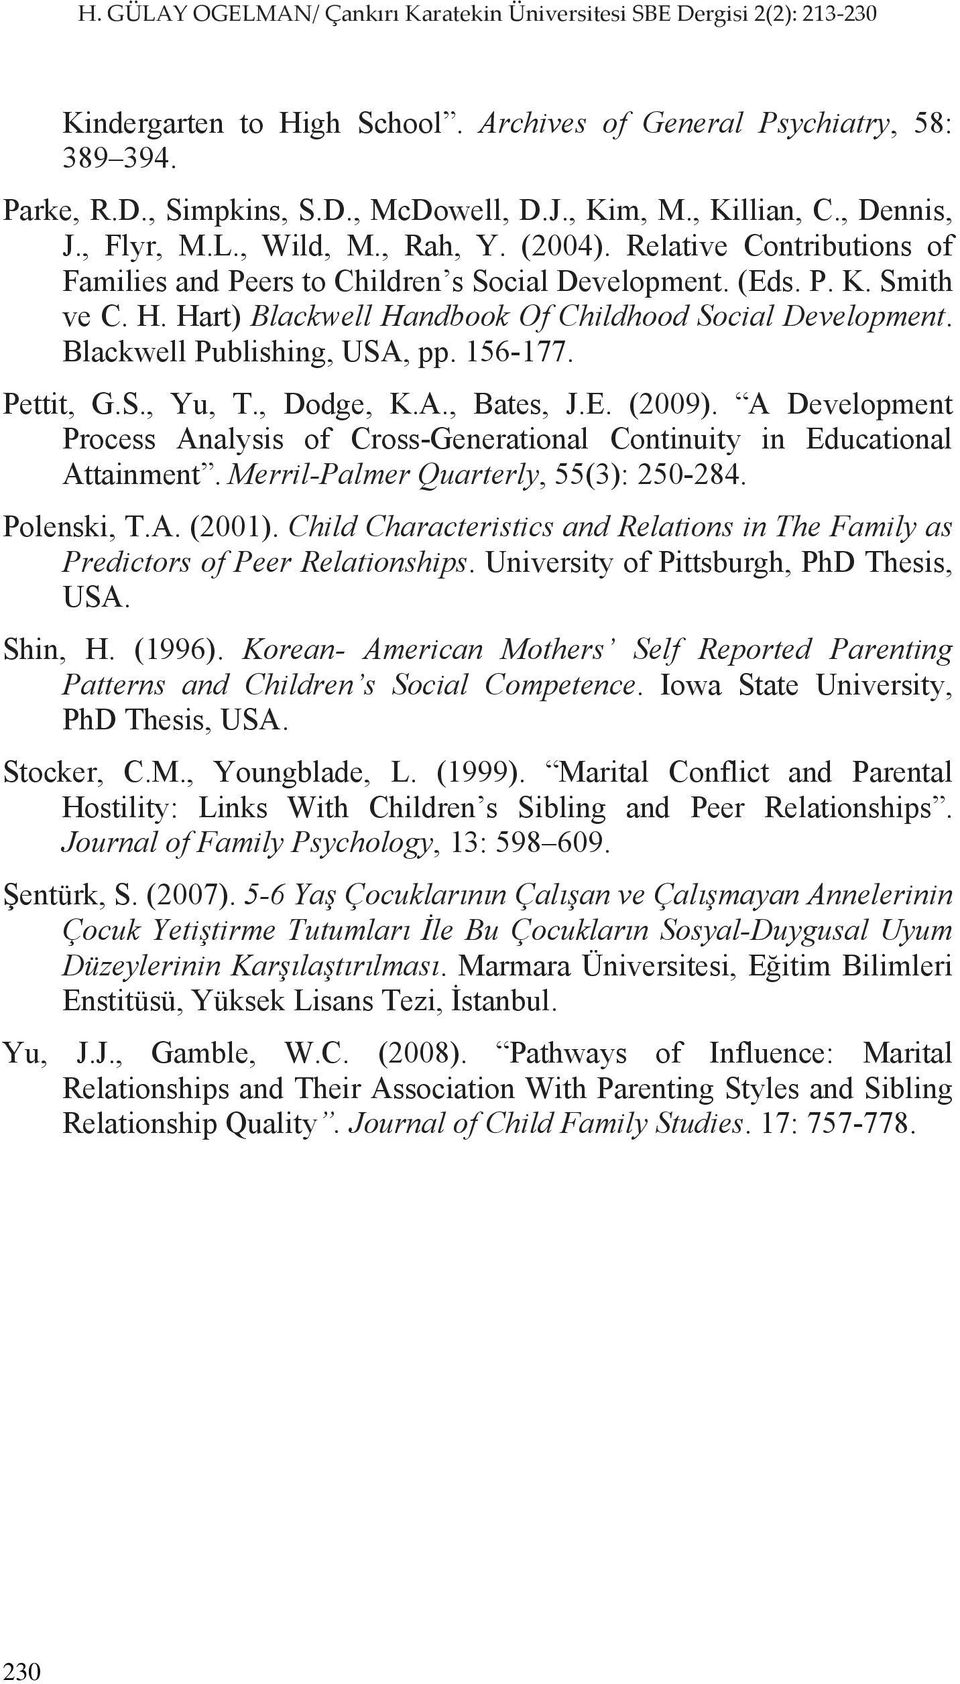 156-177. Pettit, G.S., Yu, T., Dodge, K.A., Bates, J.E. (2009). A Development Process Analysis of Cross-Generational Continuity in Educational Attainment. Merril-Palmer Quarterly, 55(3): 250-284.